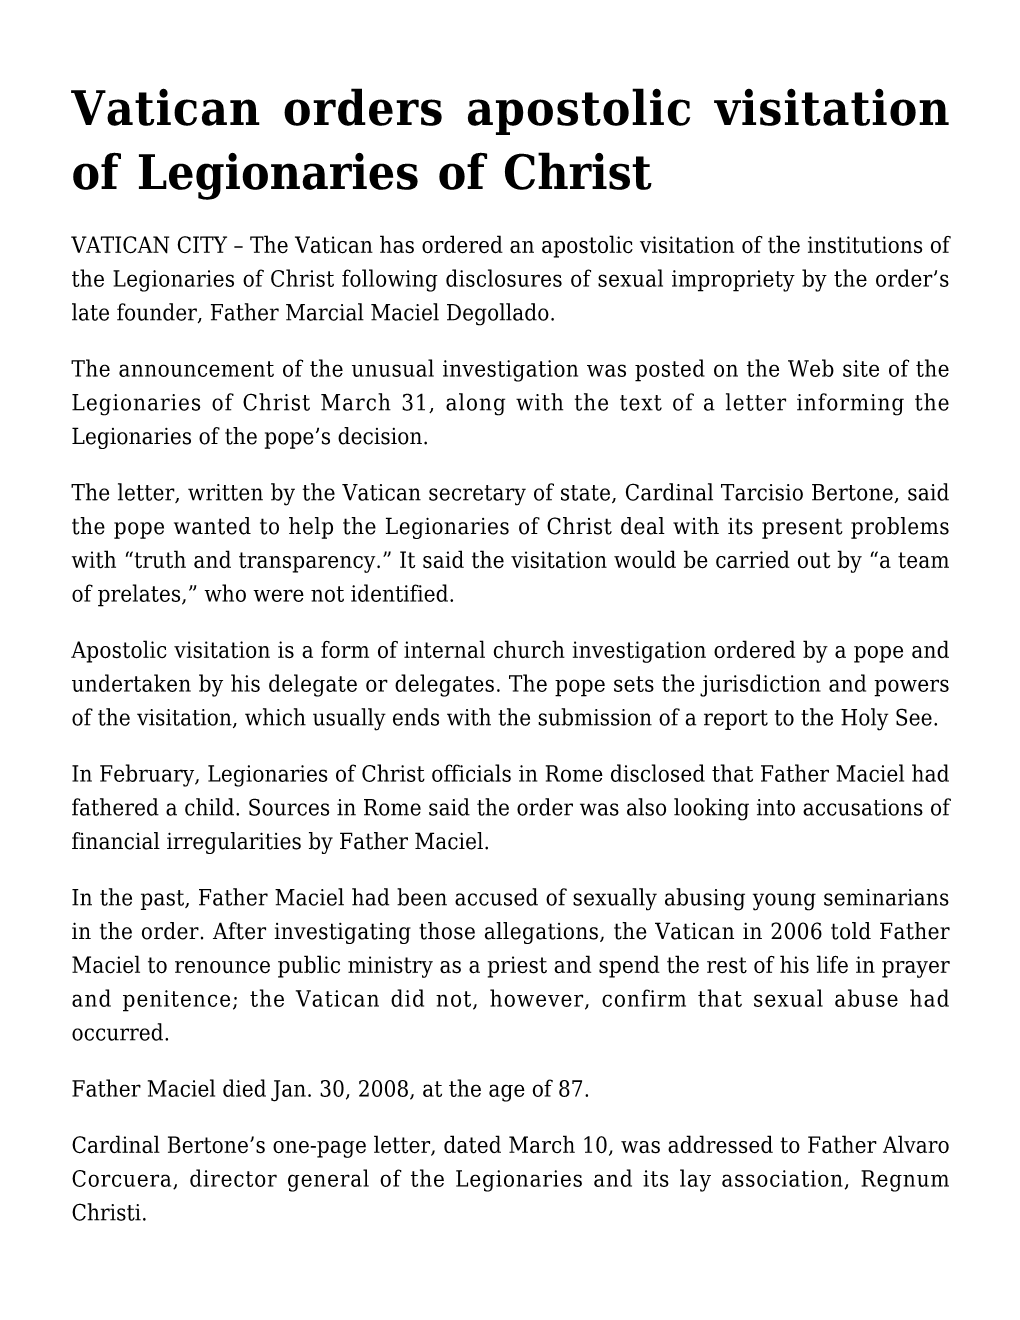 Vatican Orders Apostolic Visitation of Legionaries of Christ